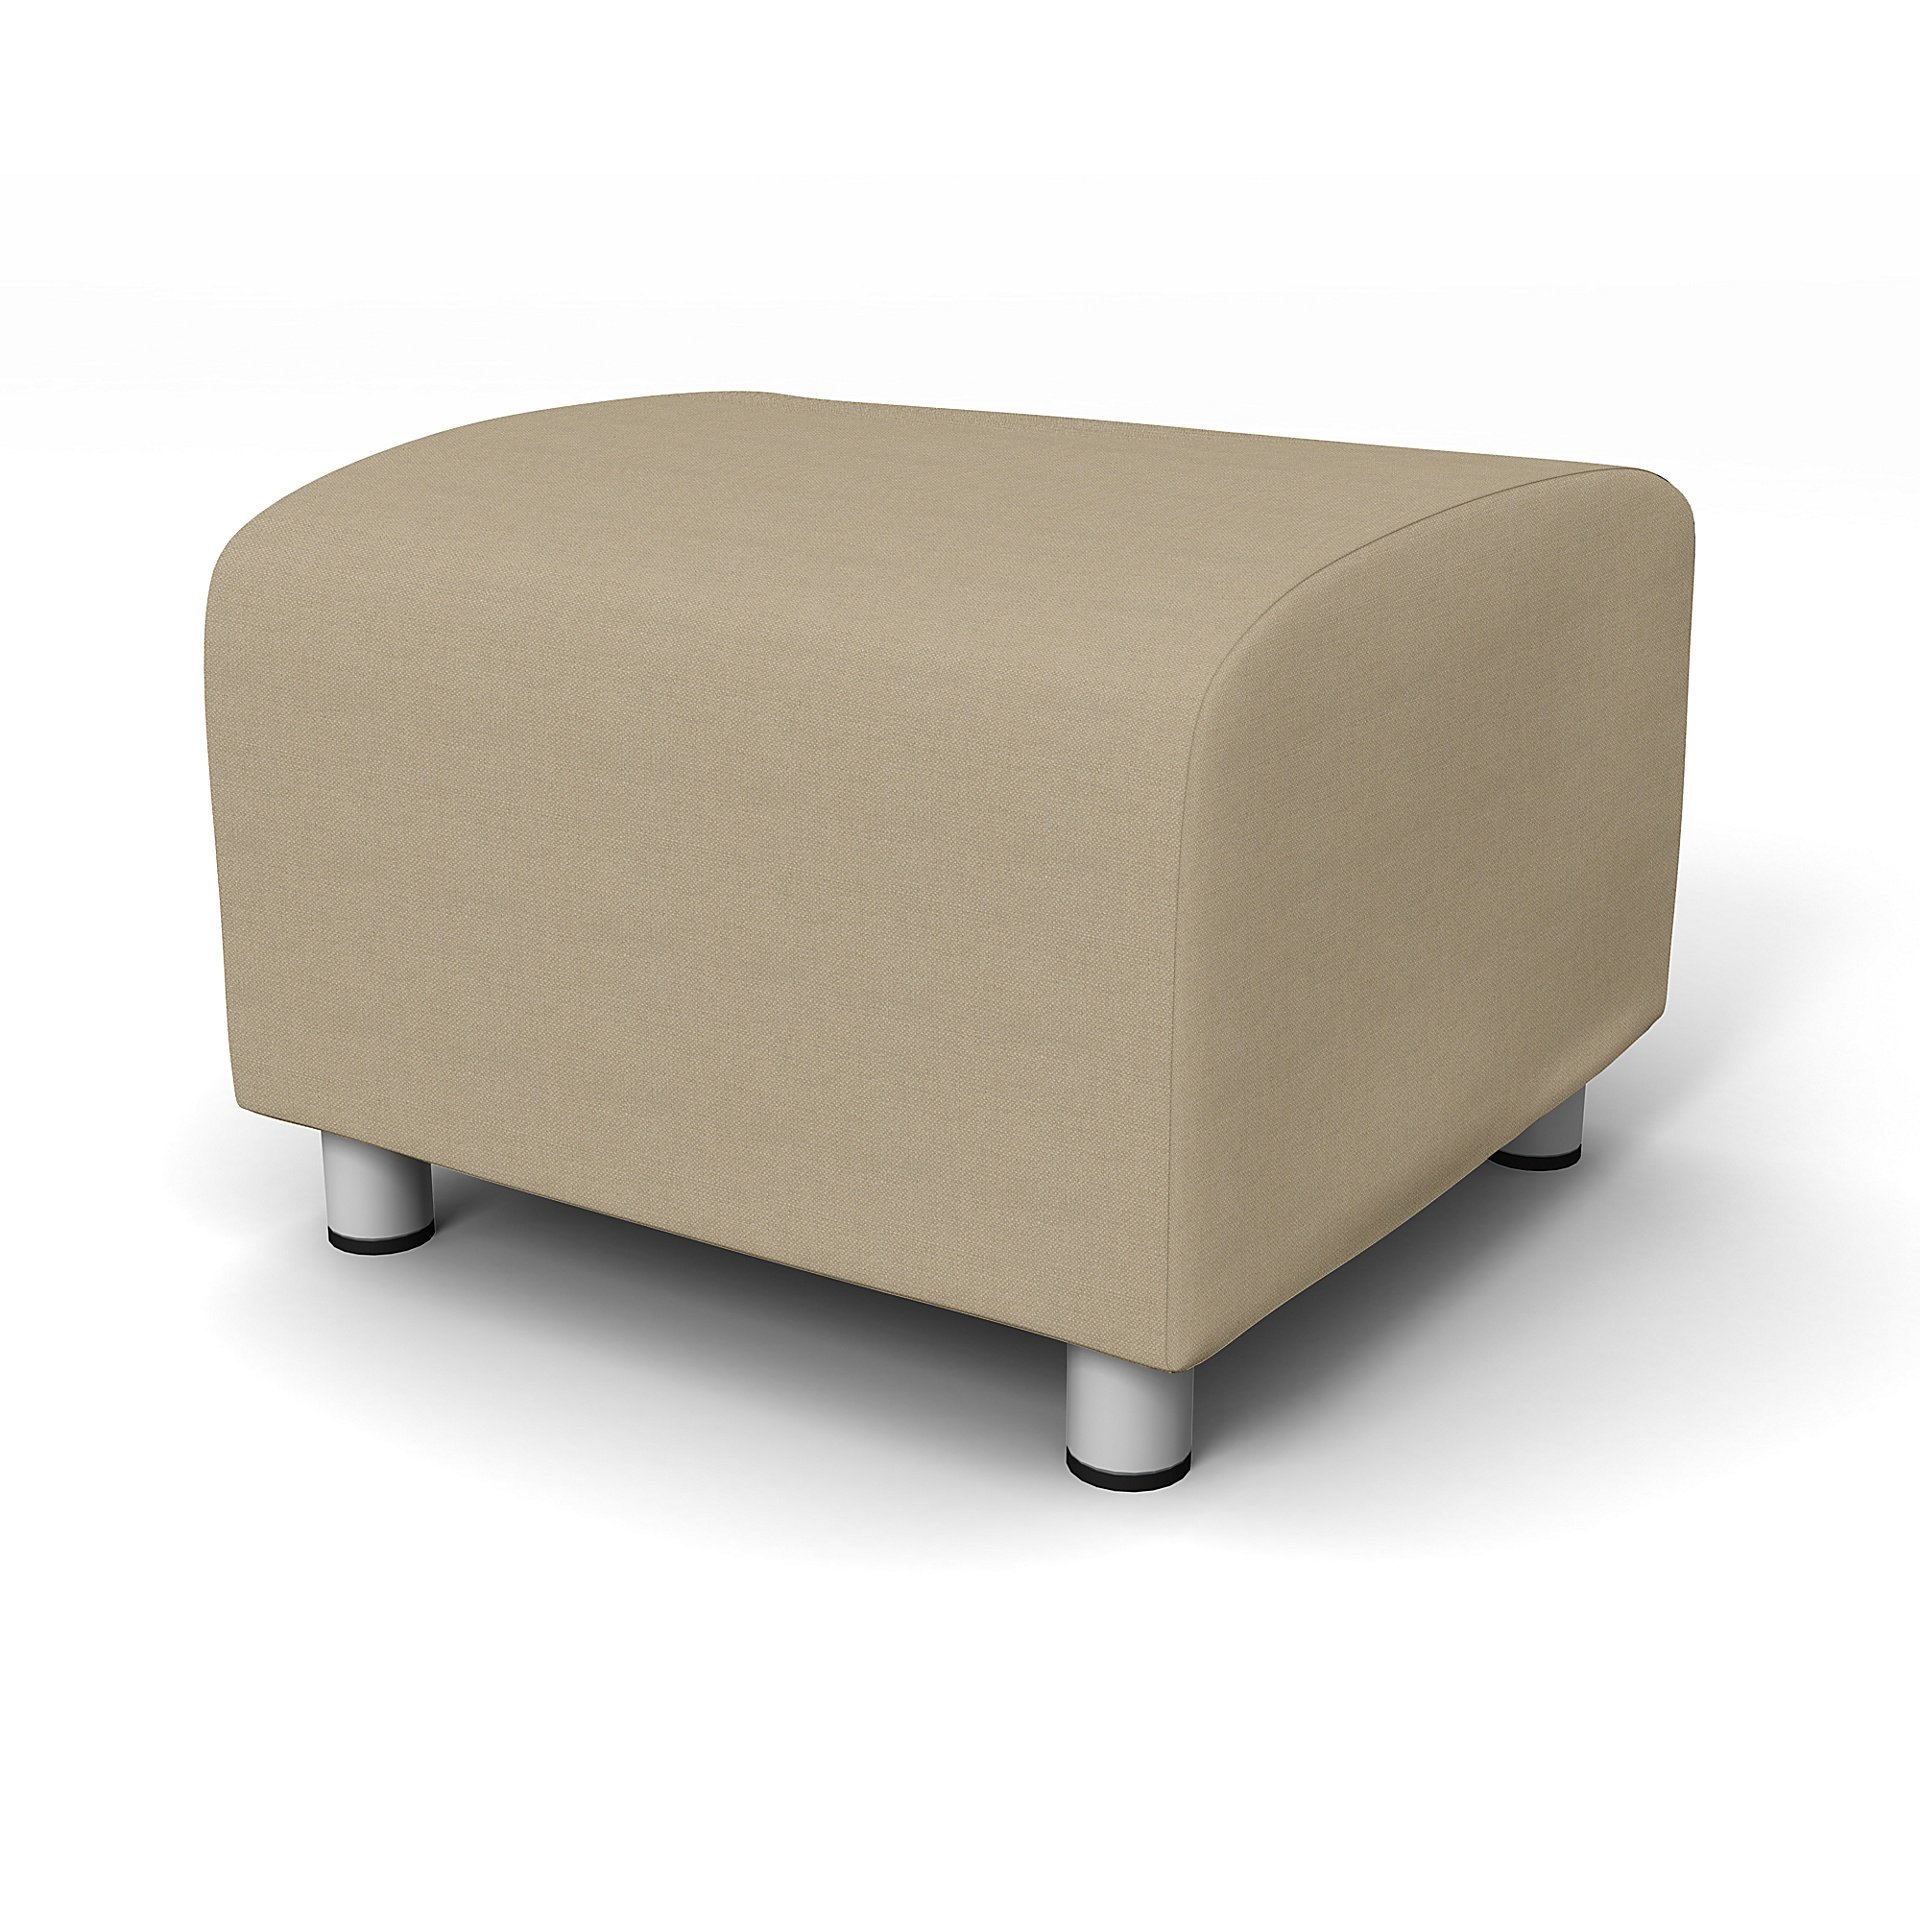 IKEA - Klippan Footstool Cover, Tan, Linen - Bemz